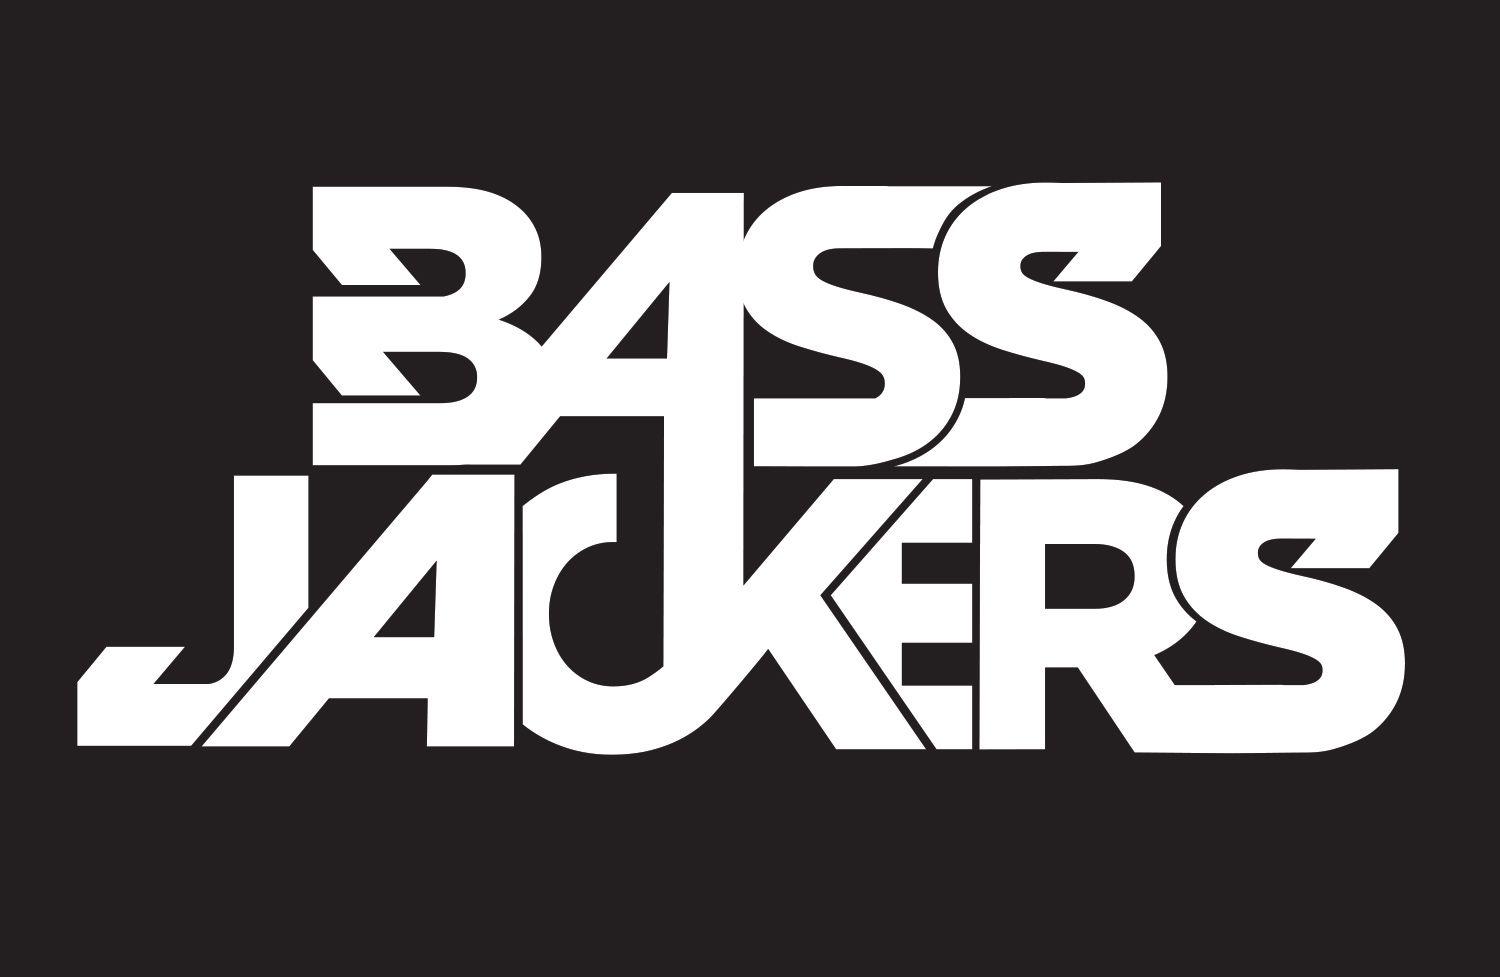 Bassjackers logo. Real madrid. Logos, Dj logo